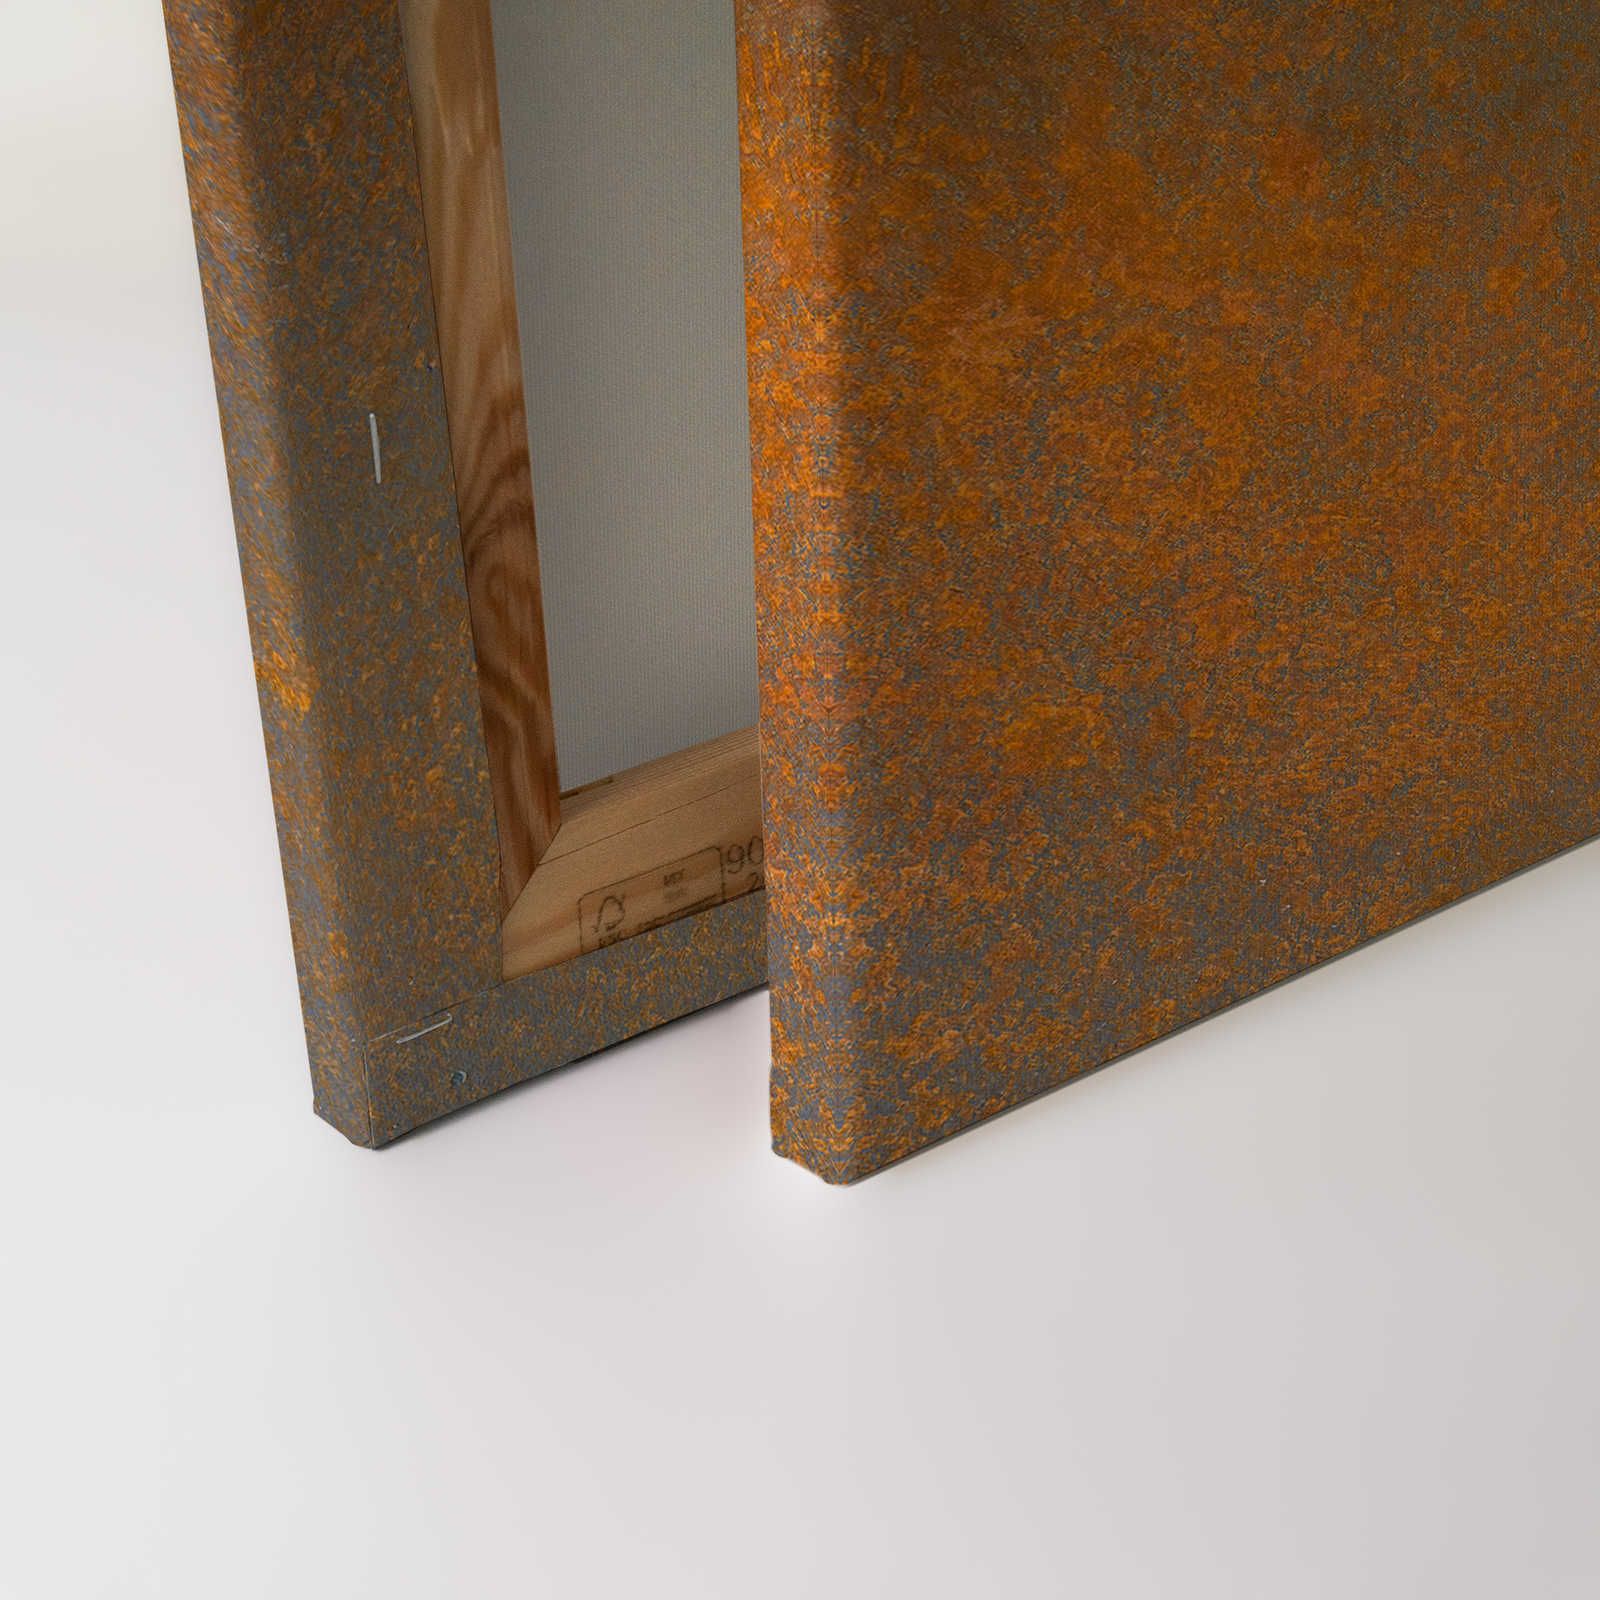             Rust Optics Canvas Schilderij Oranjebruin met used look - 0,90 m x 0,60 m
        